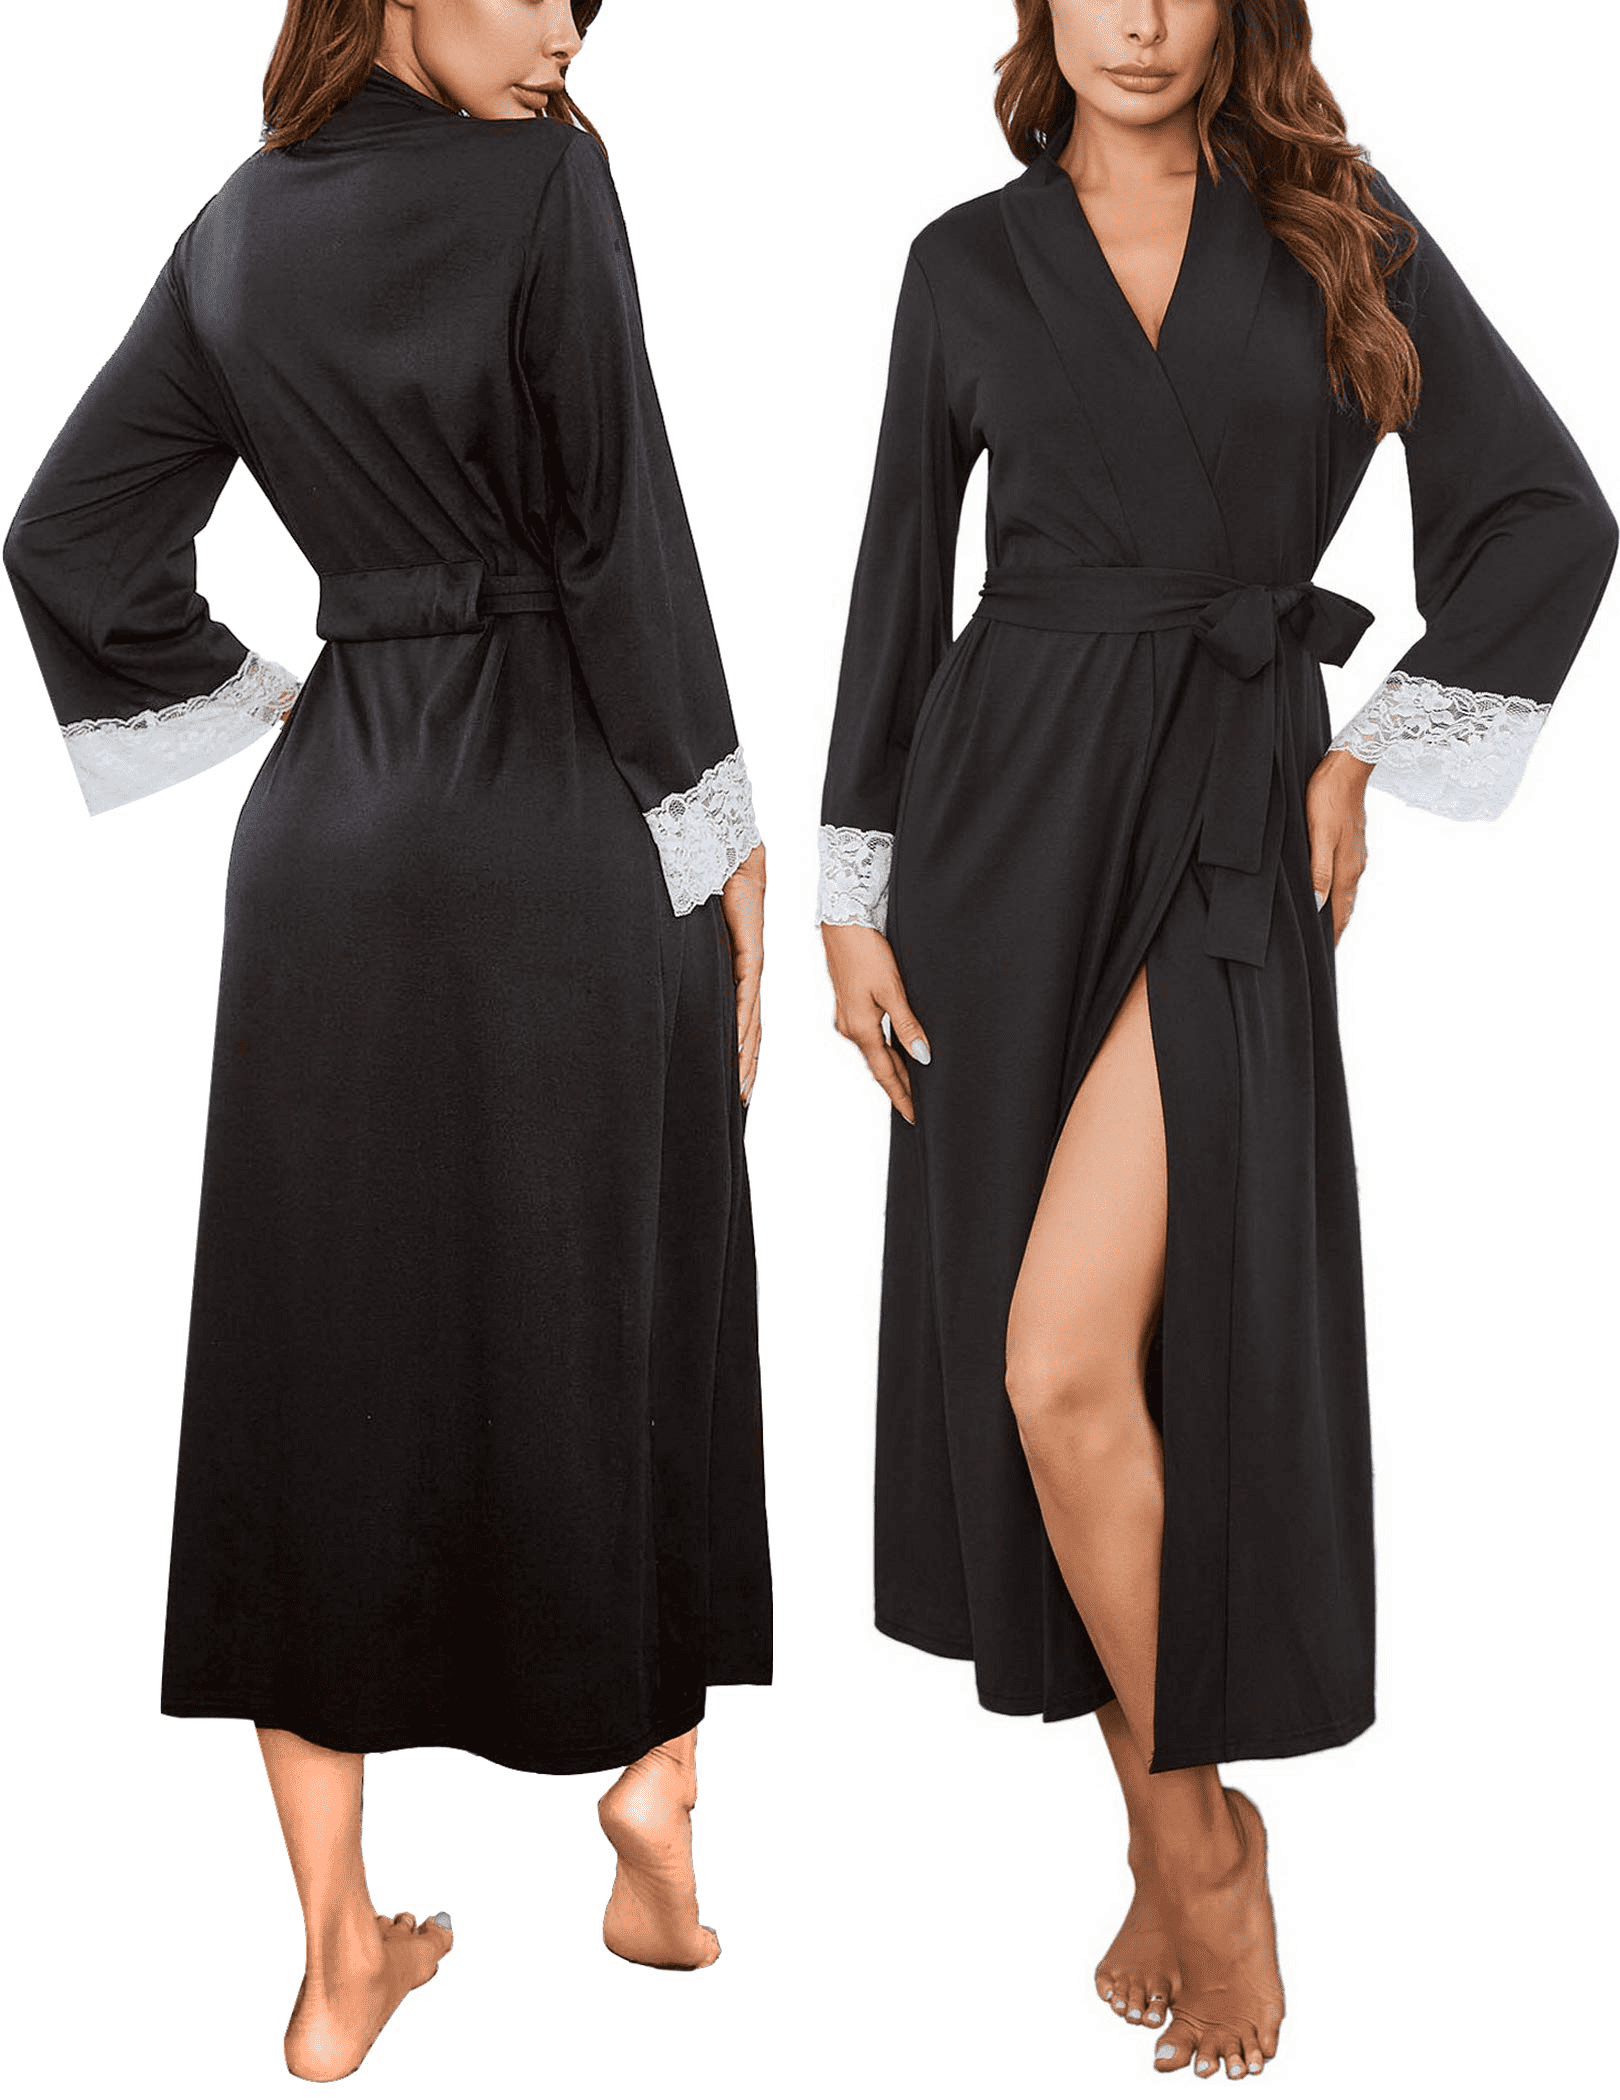 Ekouaer Robes Women Long Robes Hooded Side Slit Sleepwear Long Sleeve Housecoat Ladies Loungewear with Pockets S-XXL 